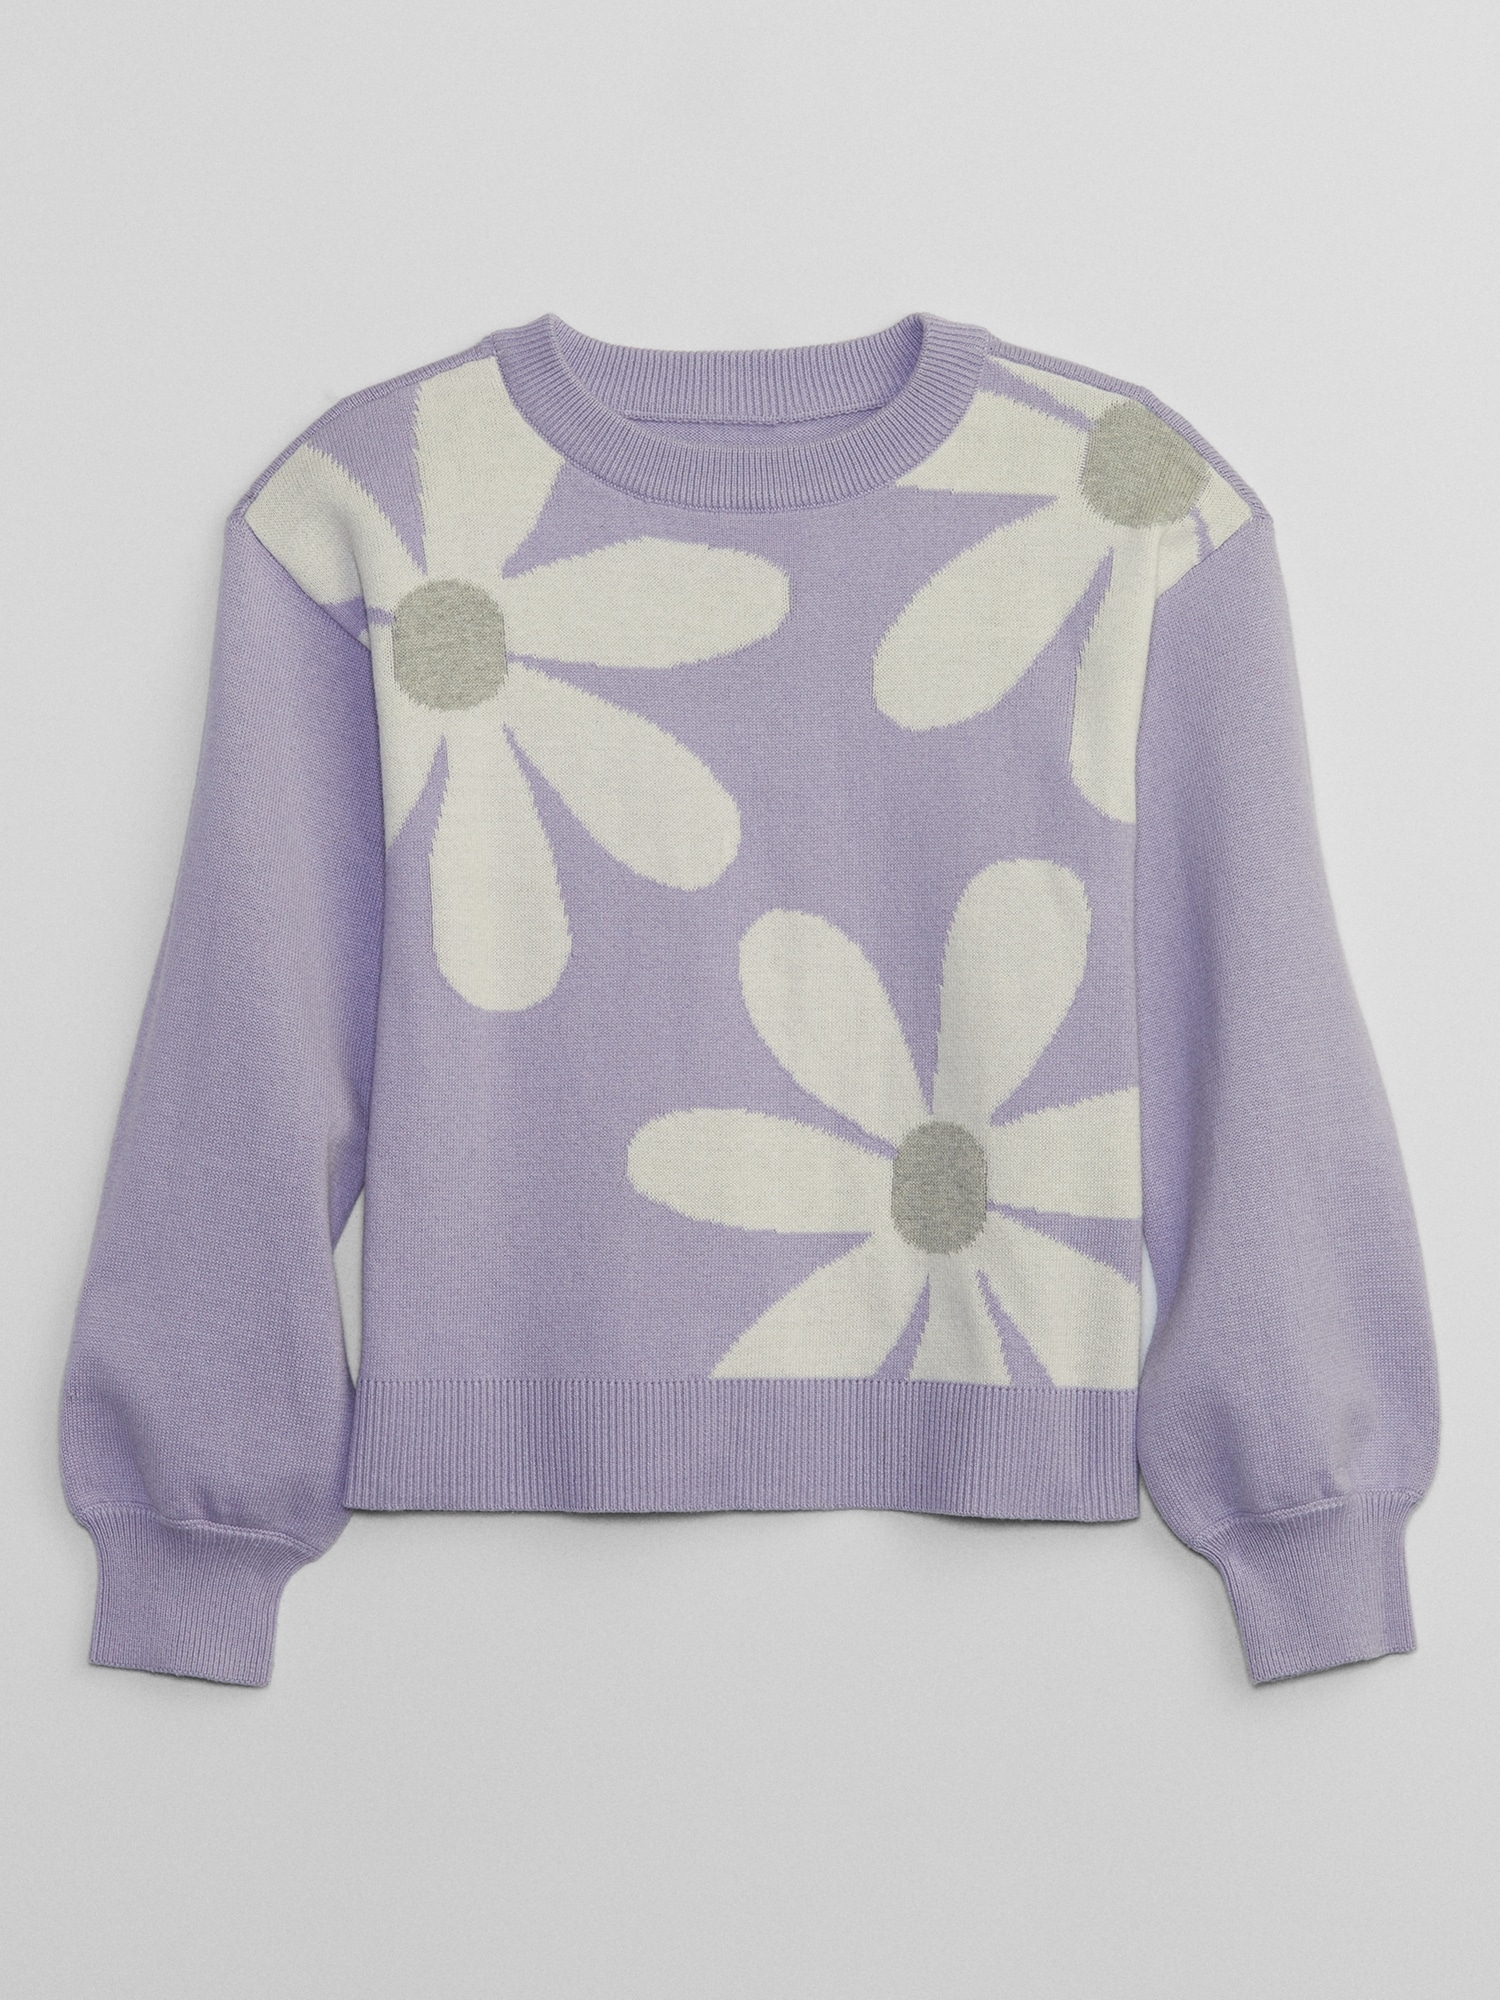 Itarsia Gap Factory | Sweater Kids Print